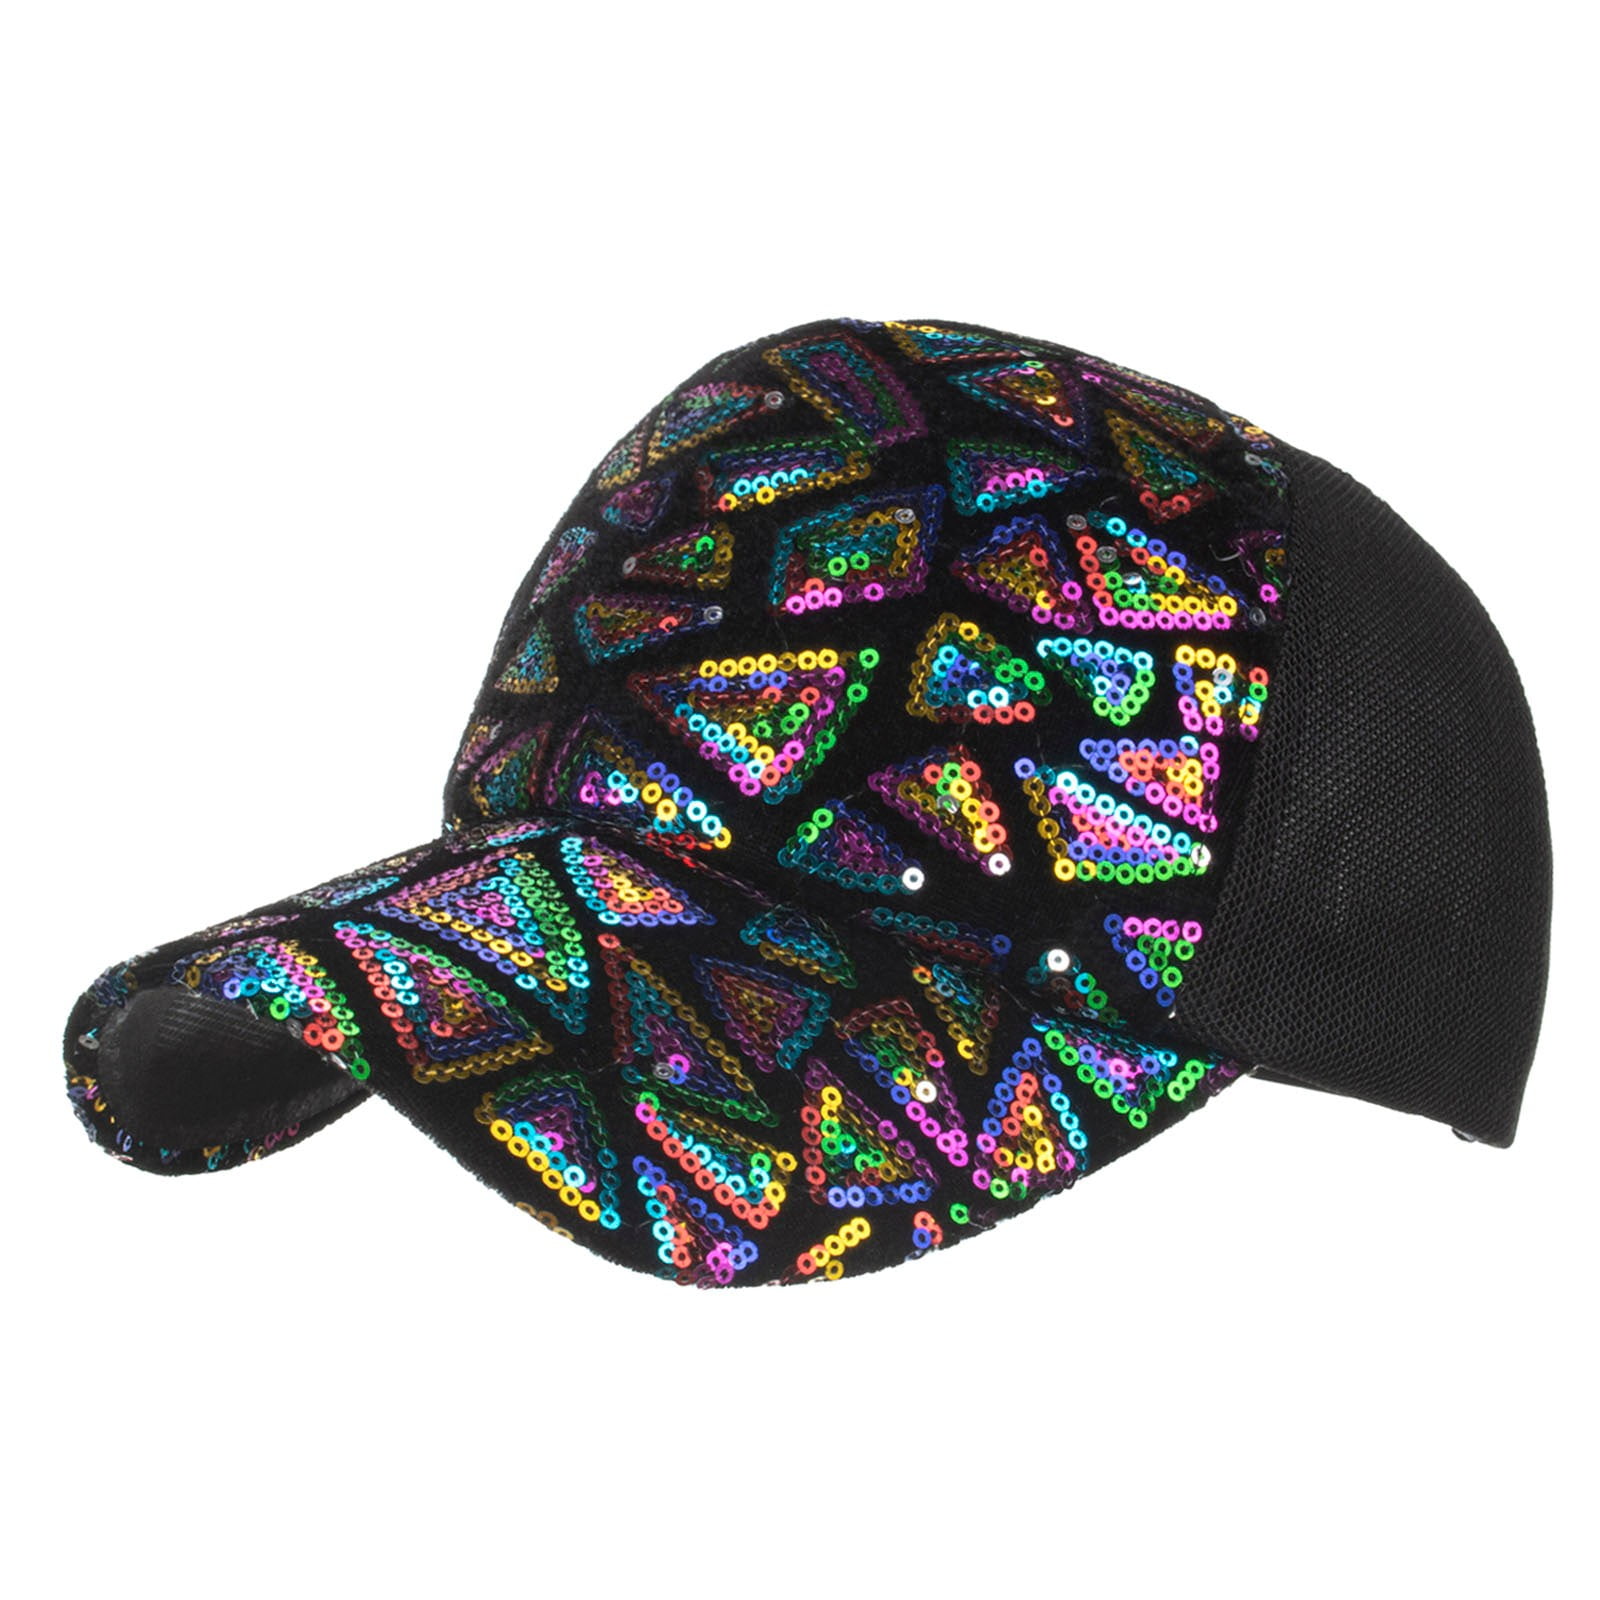 JFAN Fashion Pattern Peaked Cap Unisex Baseball Cap Hip Hop Outdoor Hat Fans Patterned Embroidery Trendy Hat 